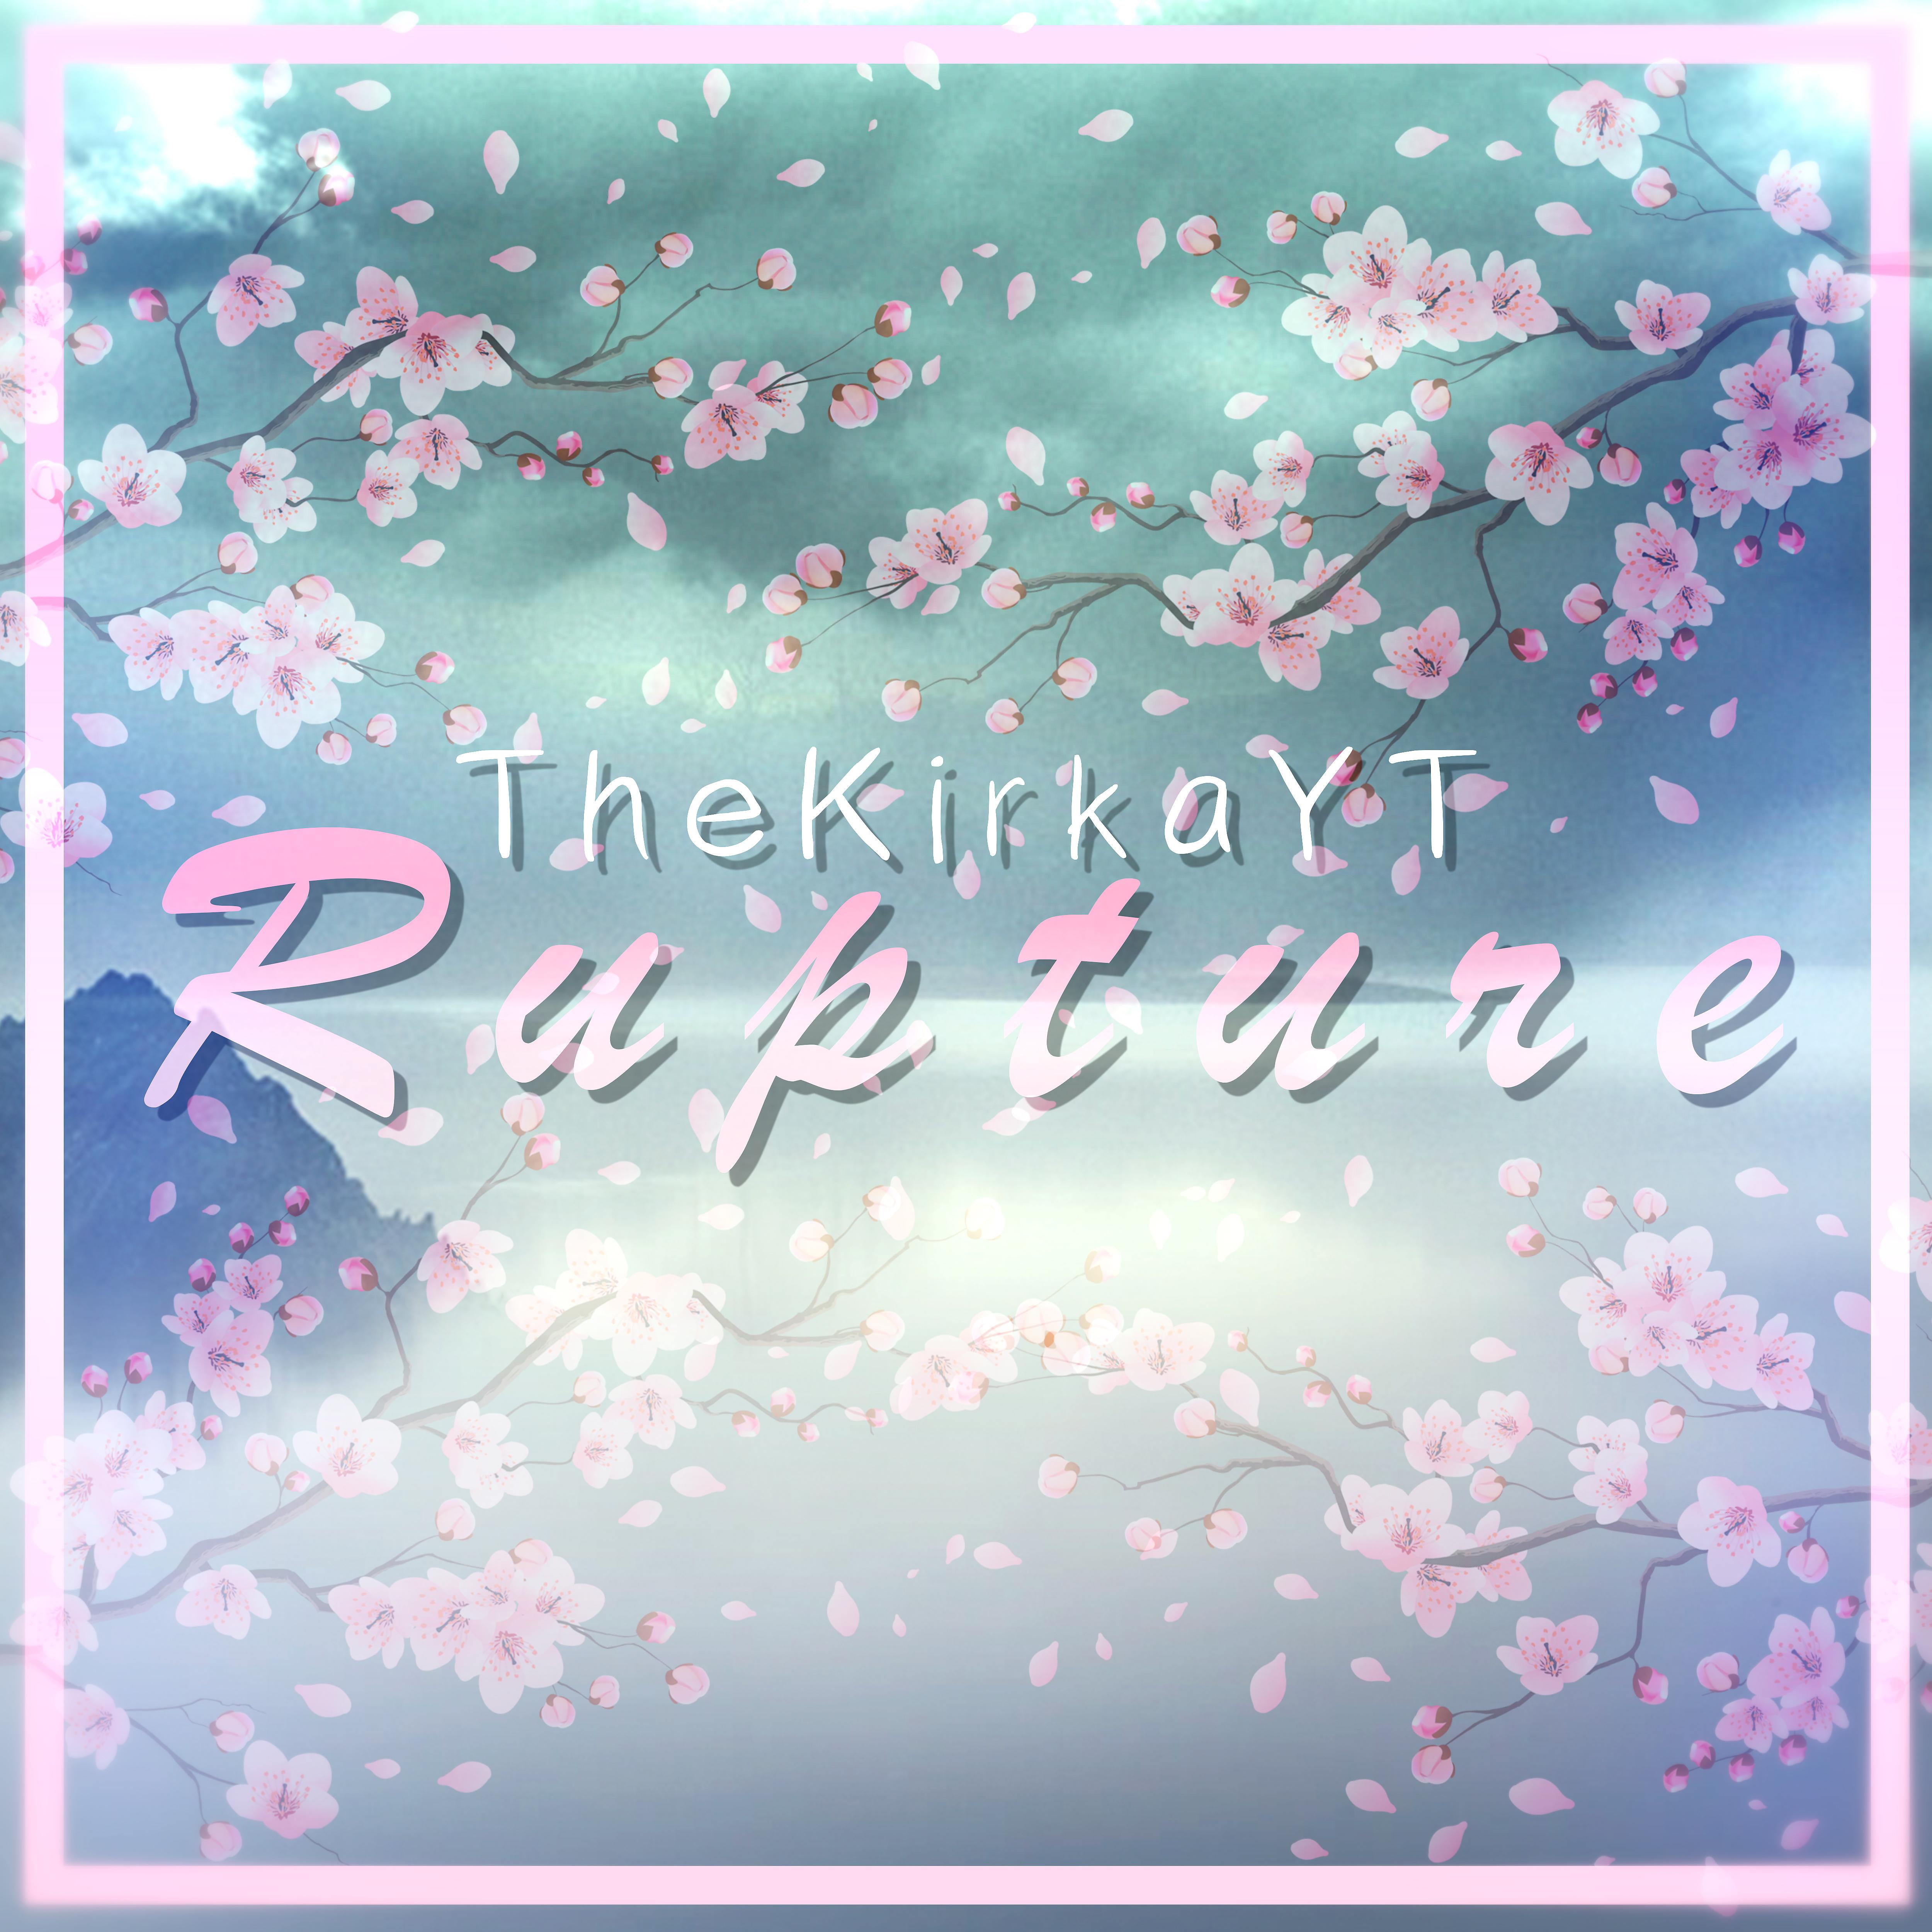 Постер альбома Rupture